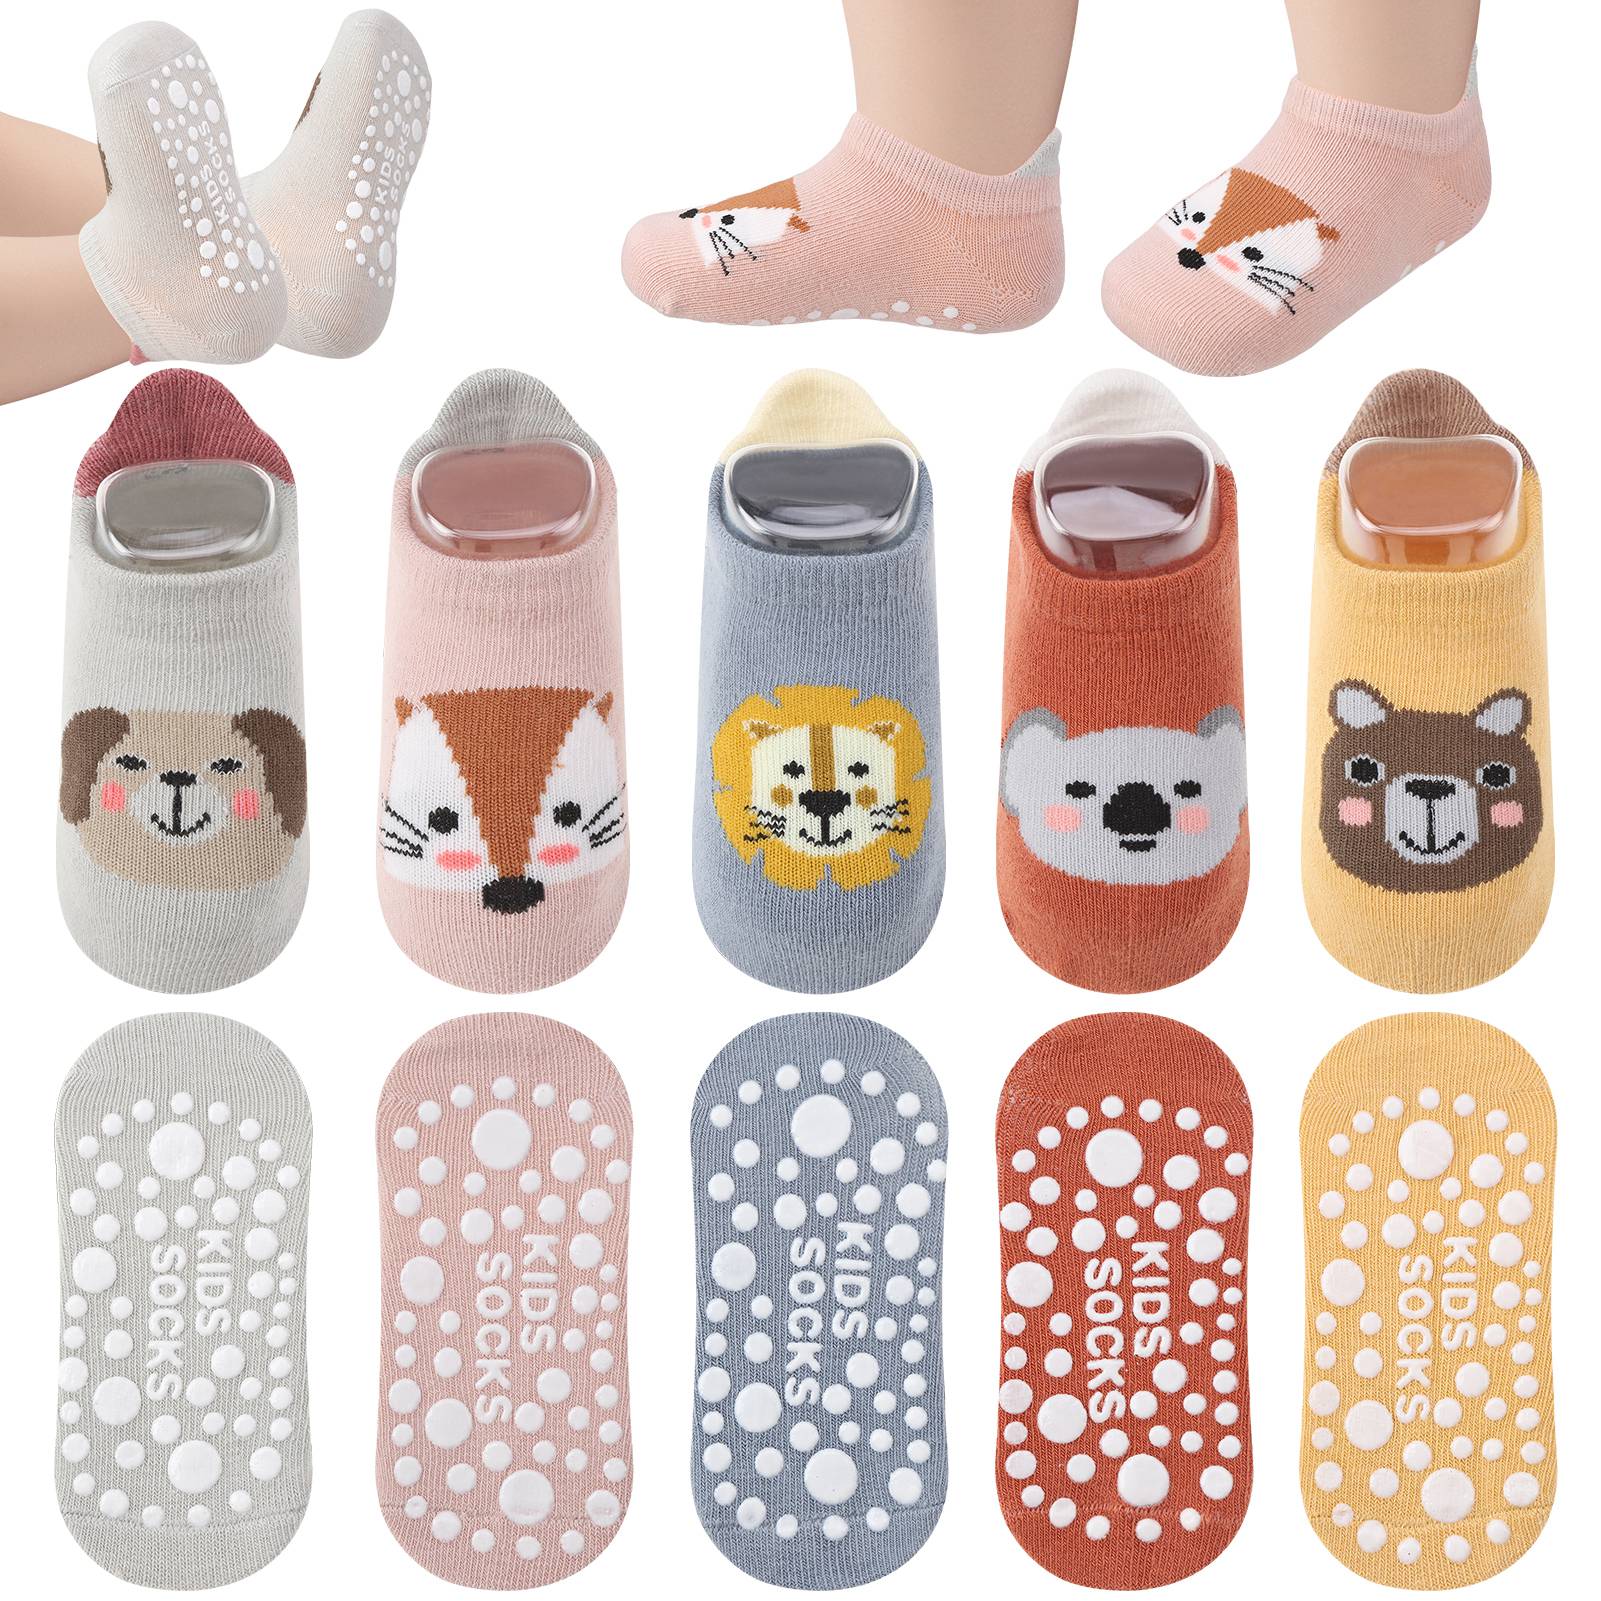 Abaima 5 Pairs Non Slip Socks Toddler Kids Animal, Baby Ankle and Crew ...